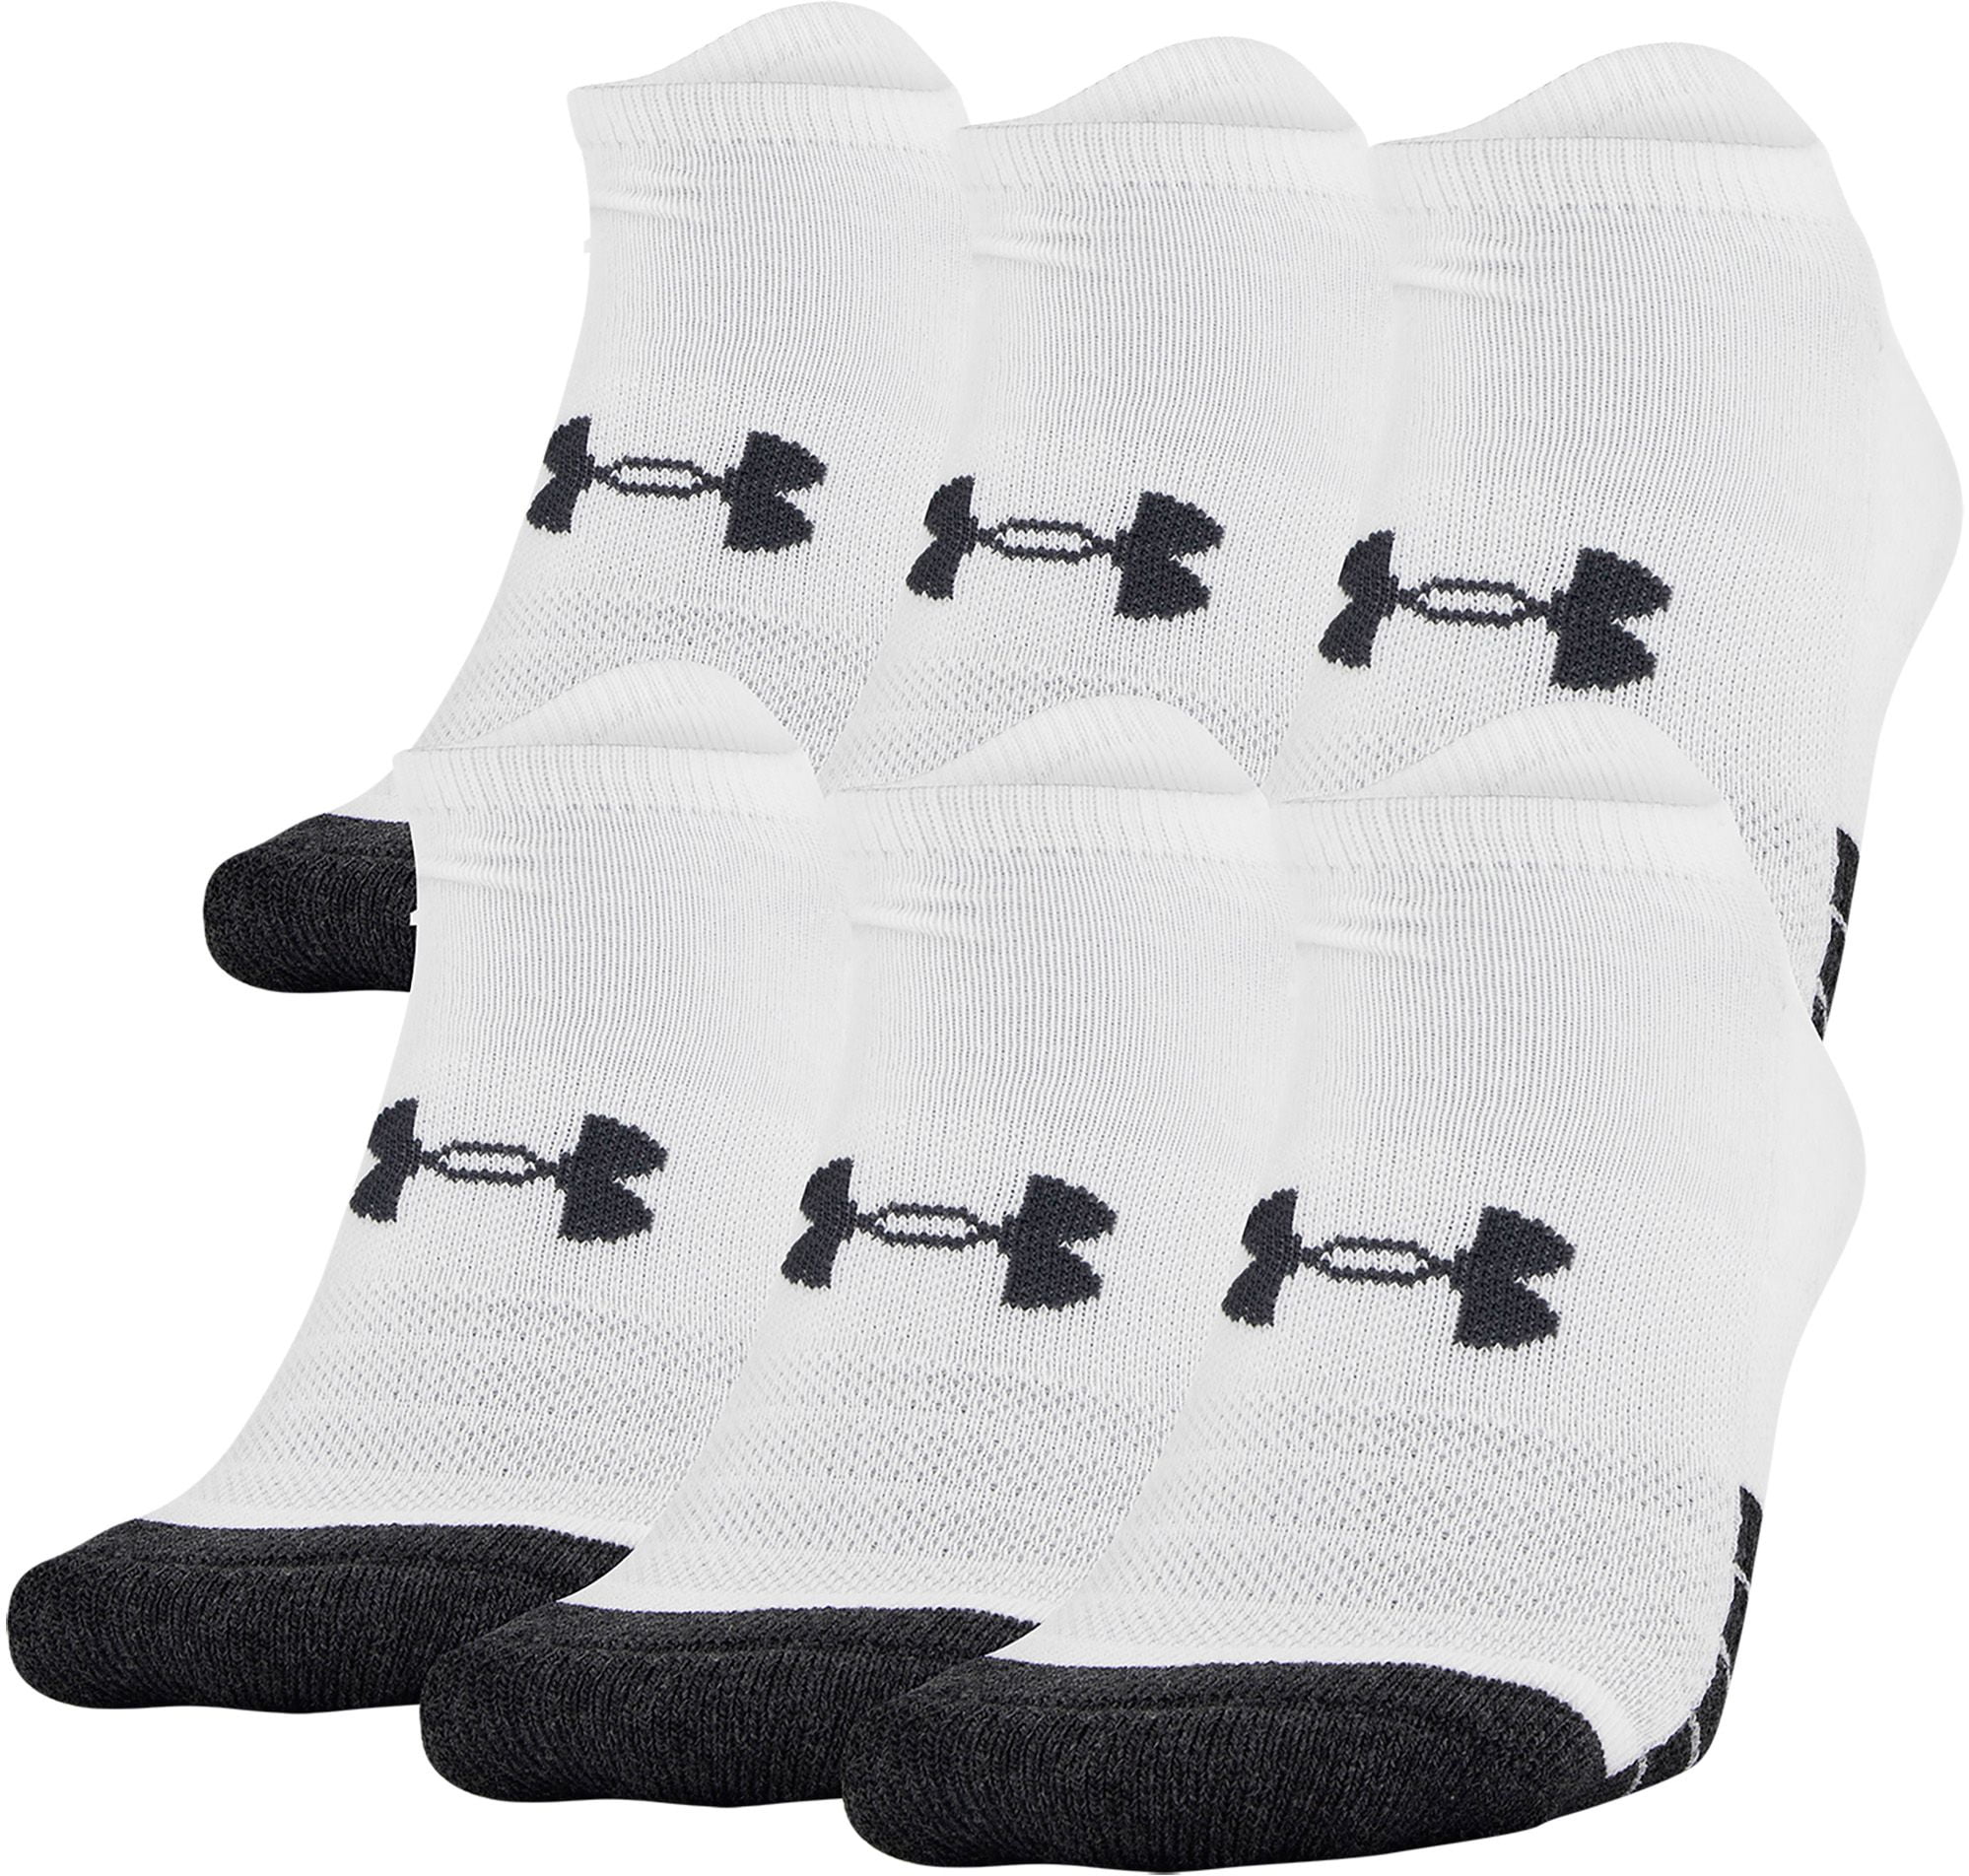 Under Armour Heatgear Tech No-Show Ankle Socks Gray/Black/White LG 10-13 1303200 